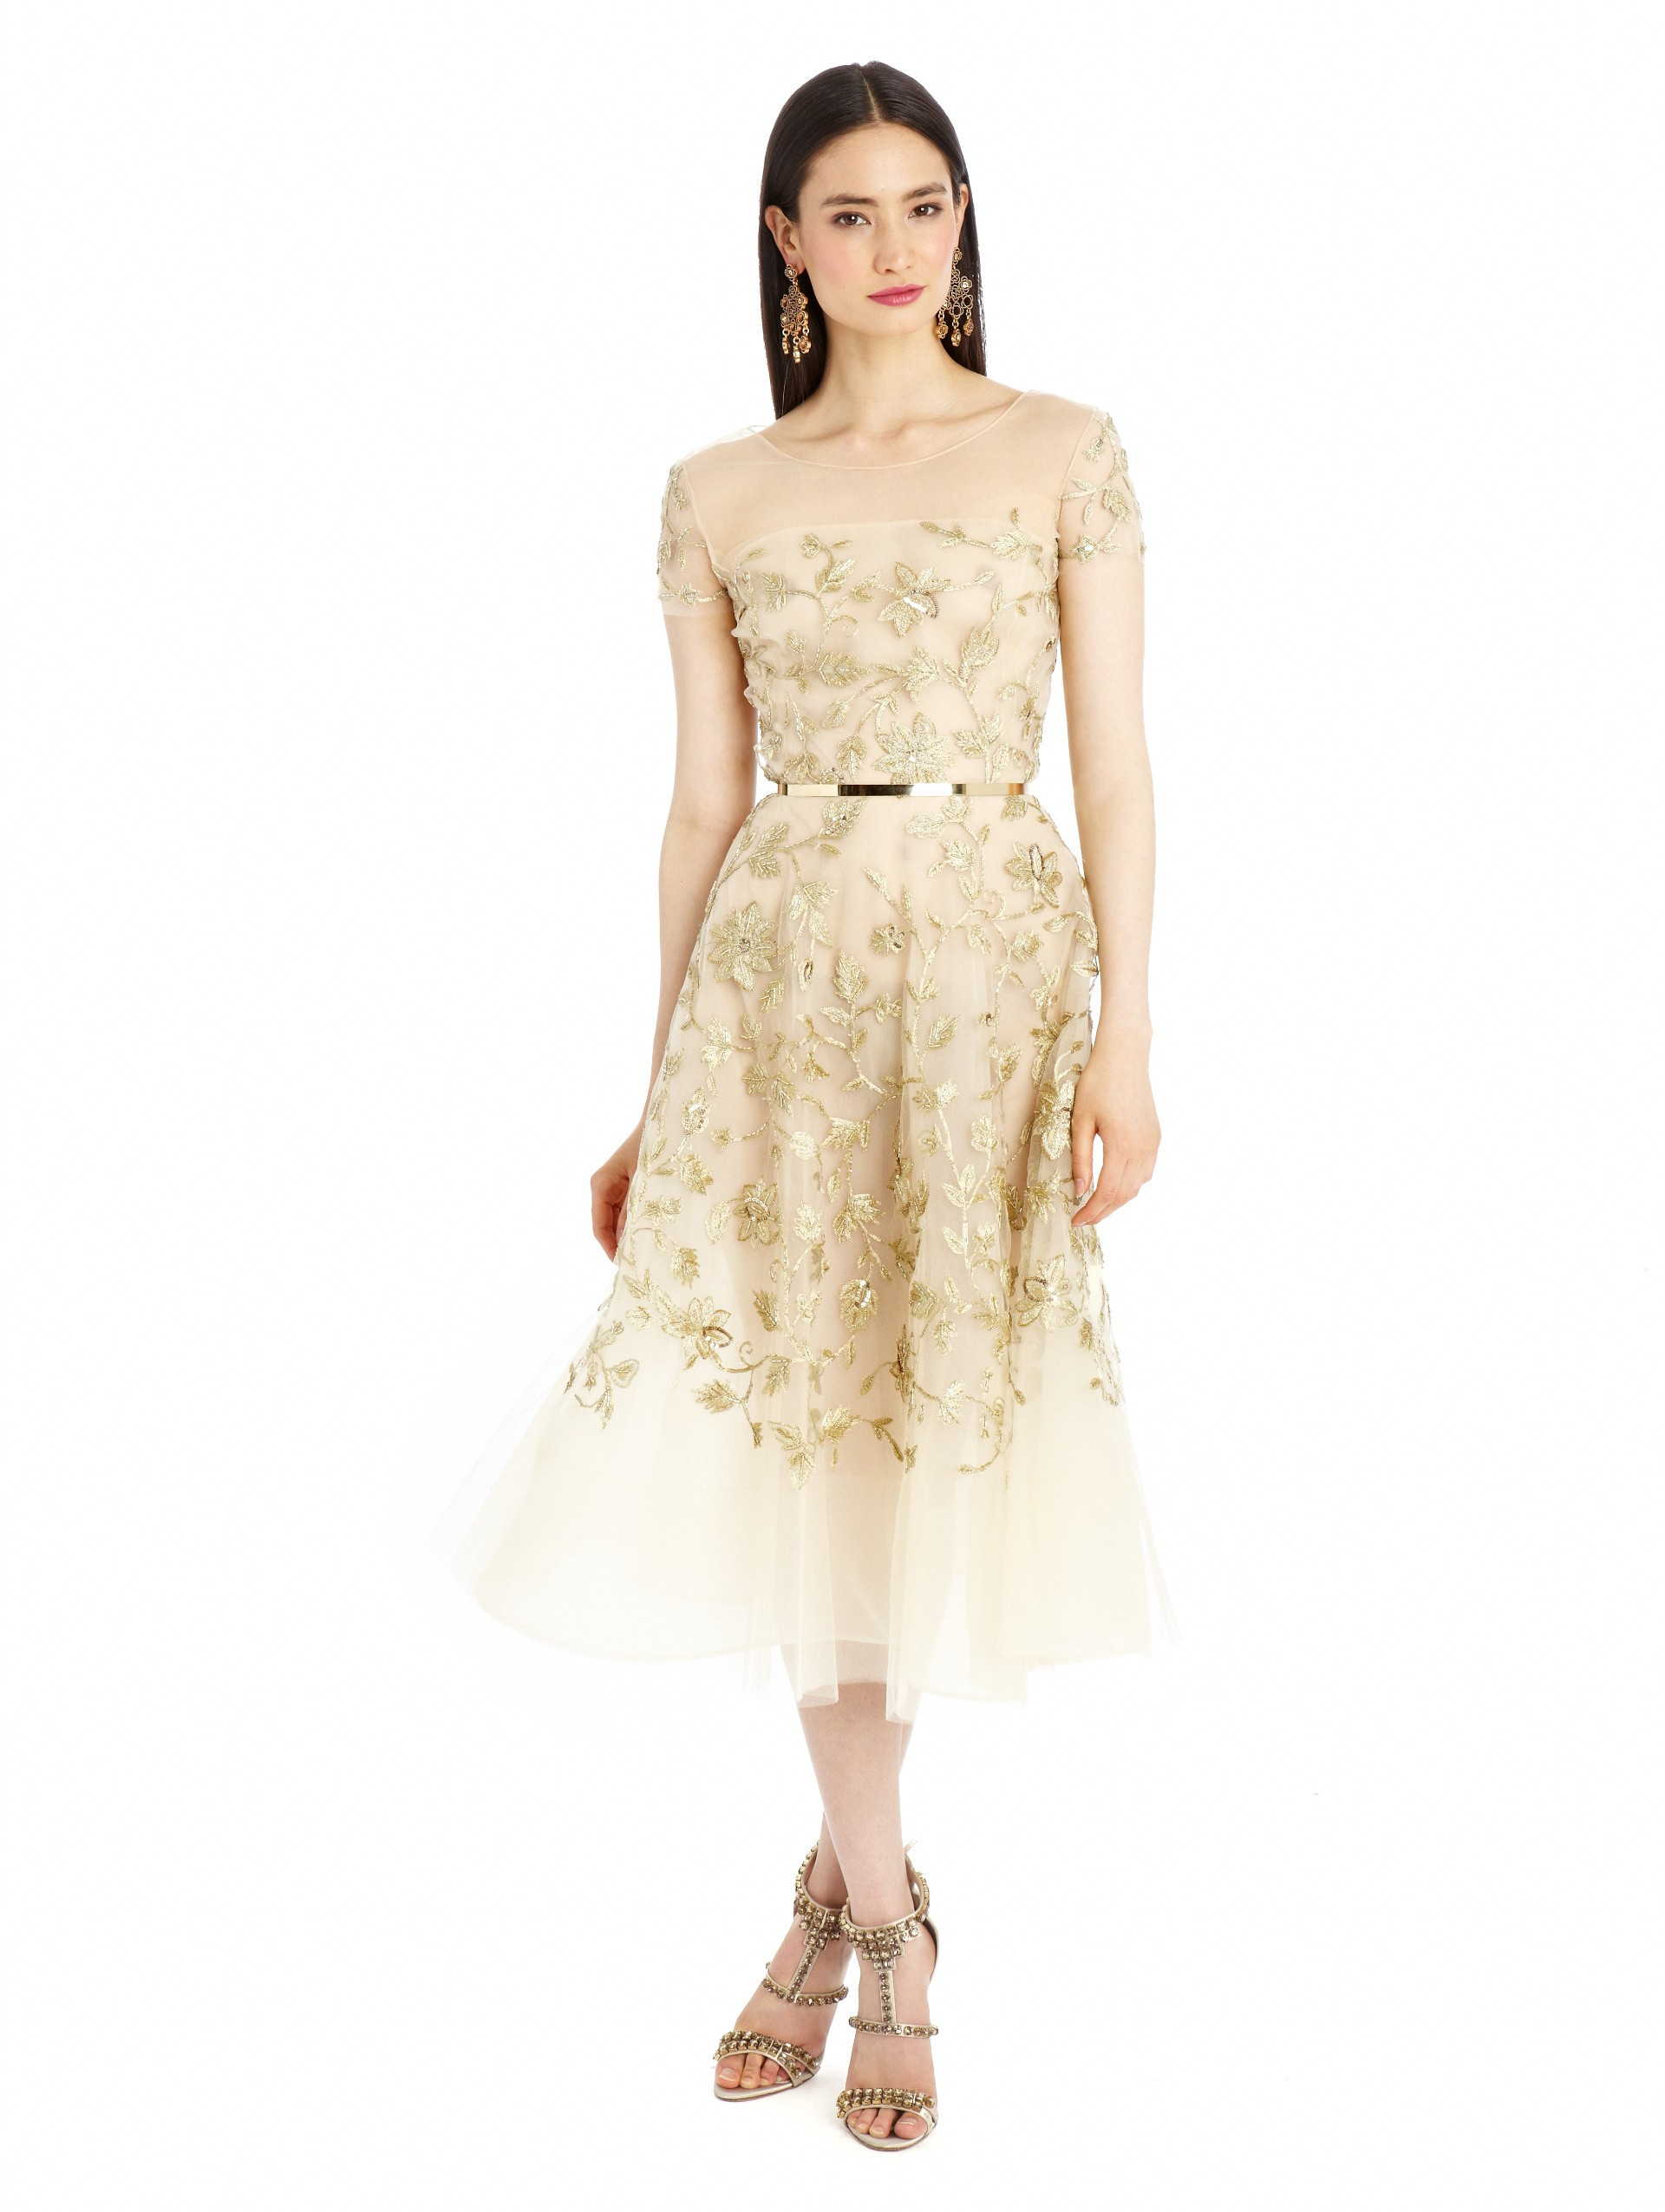 Lyst Oscar De La Renta Gold Floral Embroidered Tulle Dress In Metallic 4613